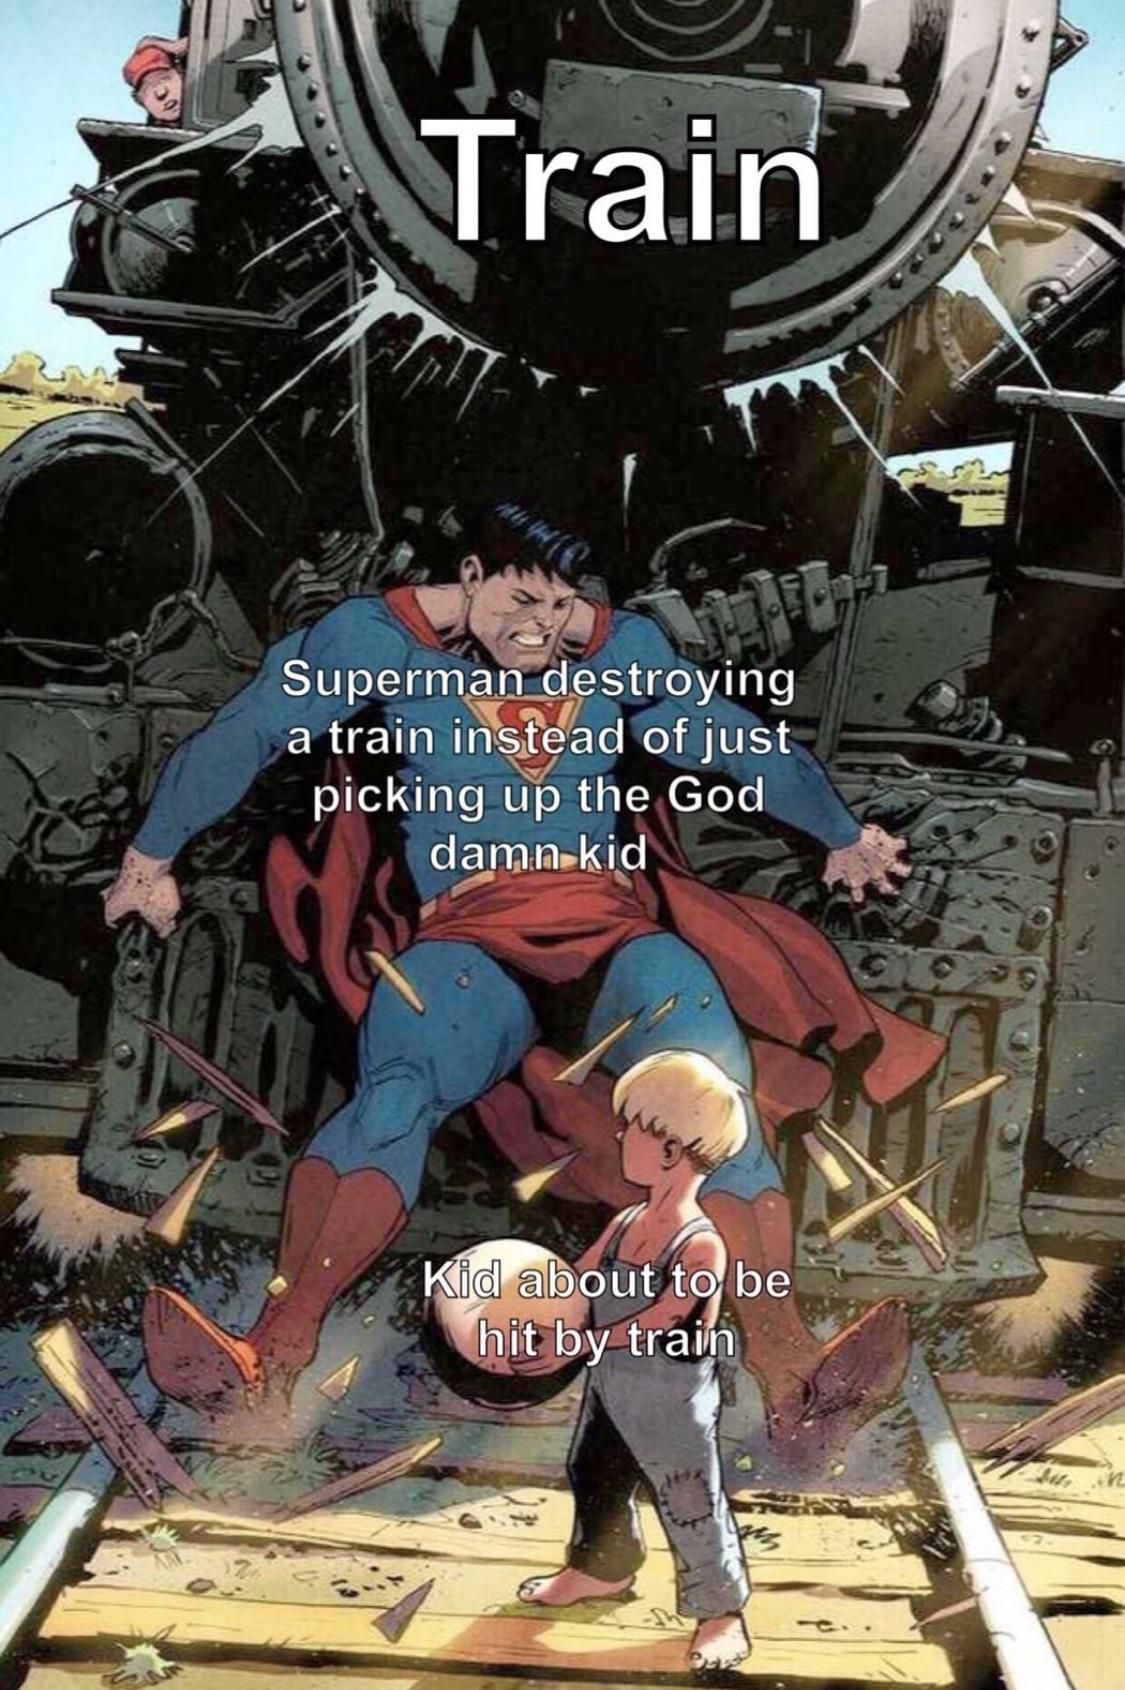 Superman logic: 100